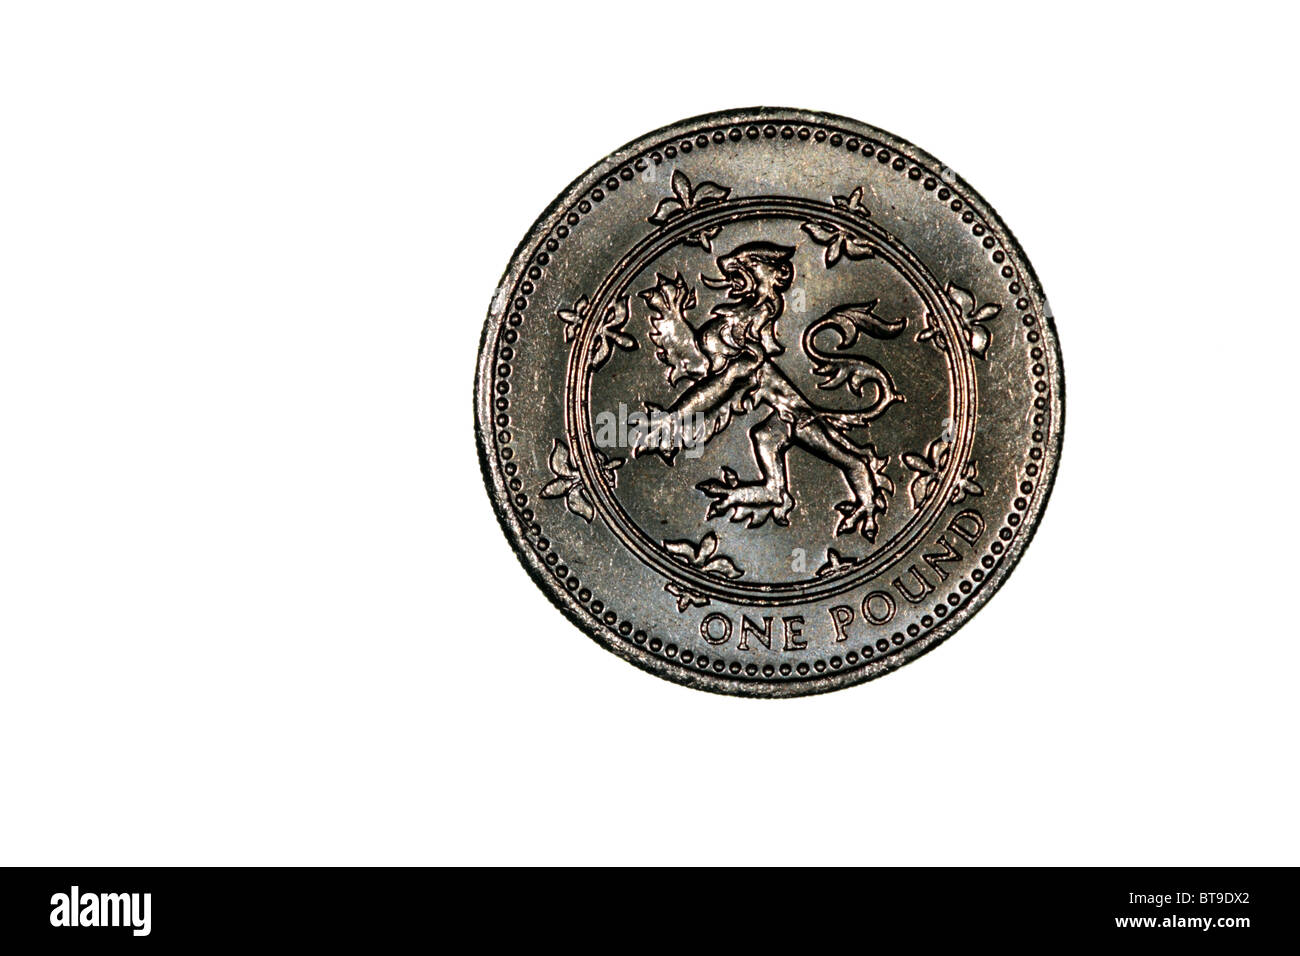 Pound coin design Scotland Stock Photo